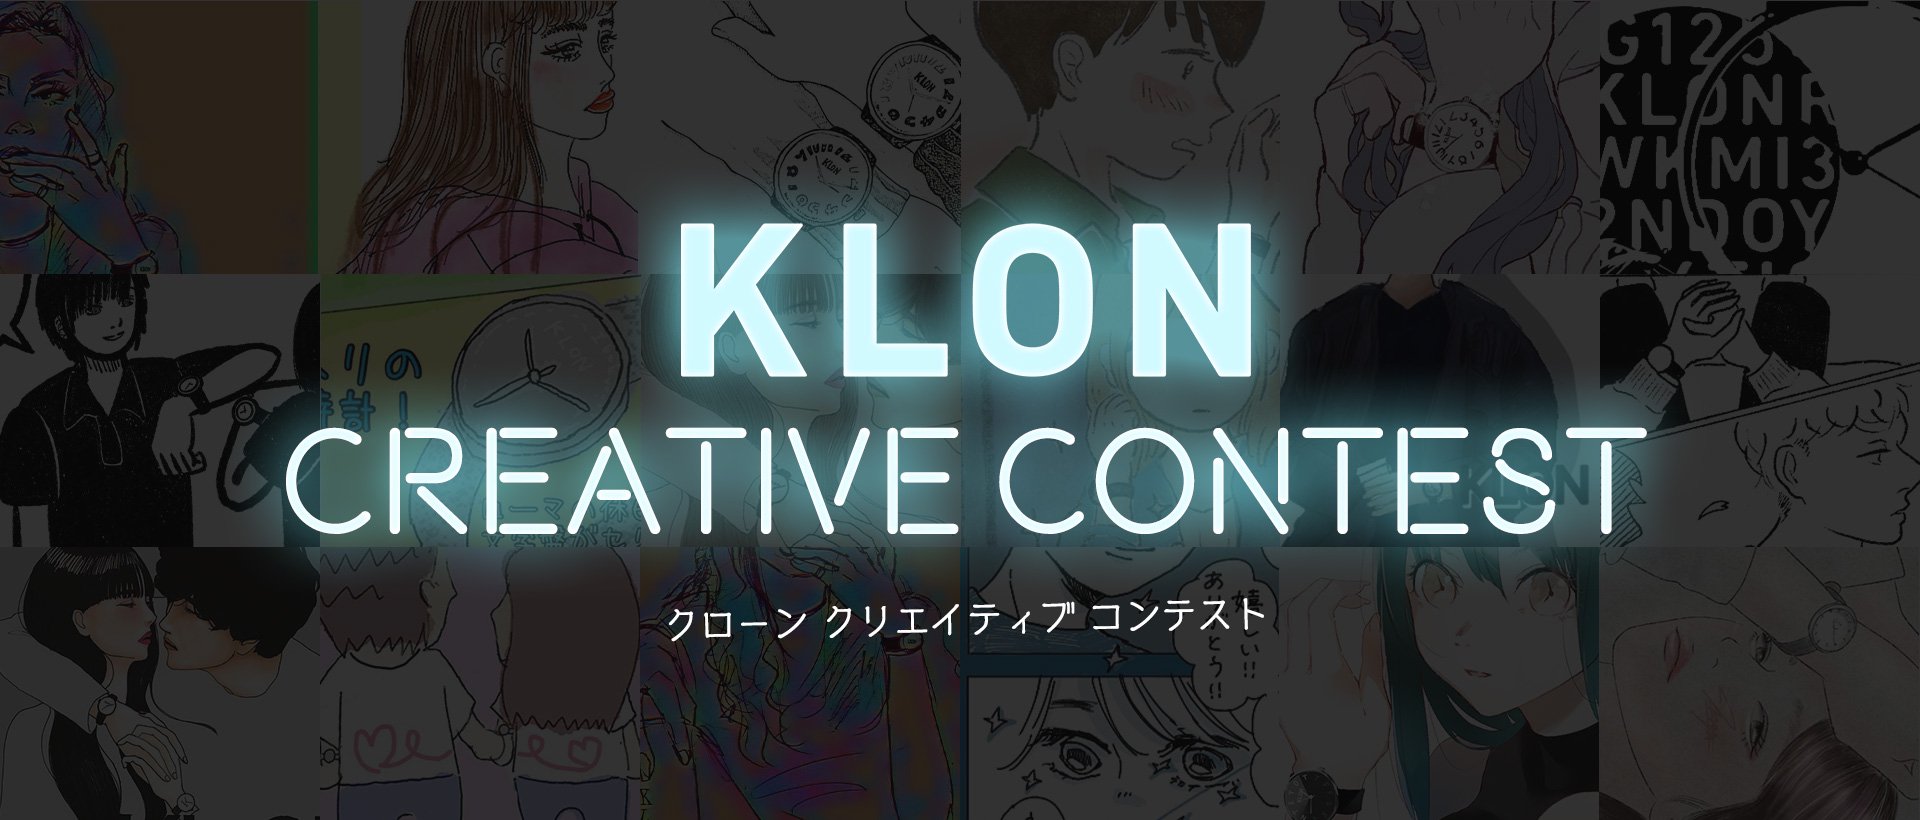 KLON CREATIVE CONTEST